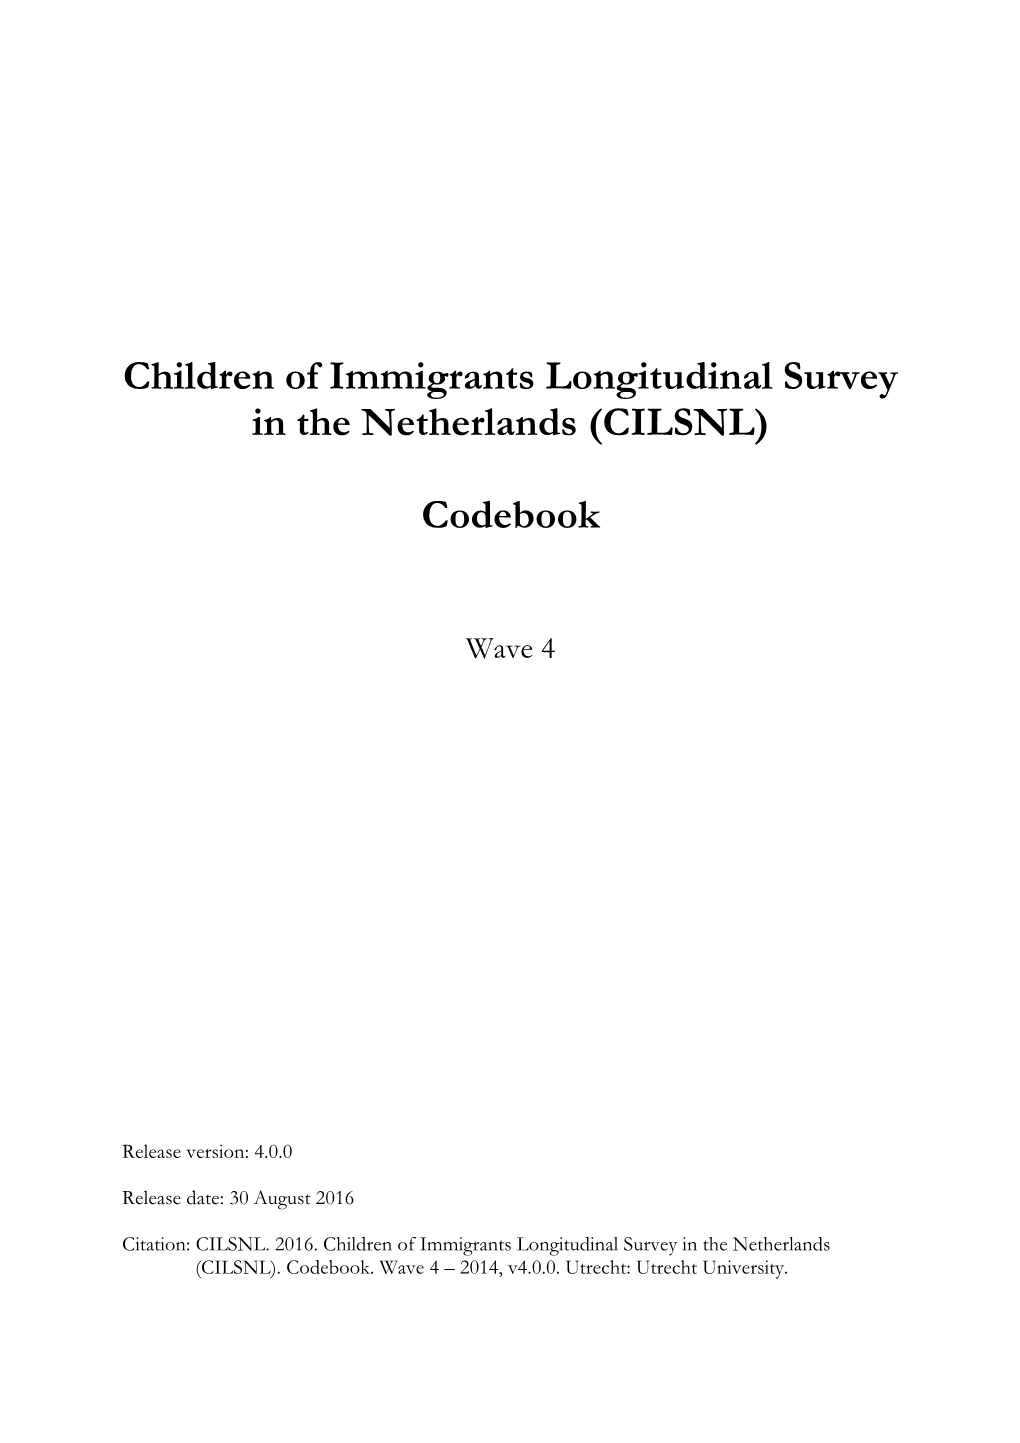 Children of Immigrants Longitudinal Survey in the Netherlands (CILSNL)